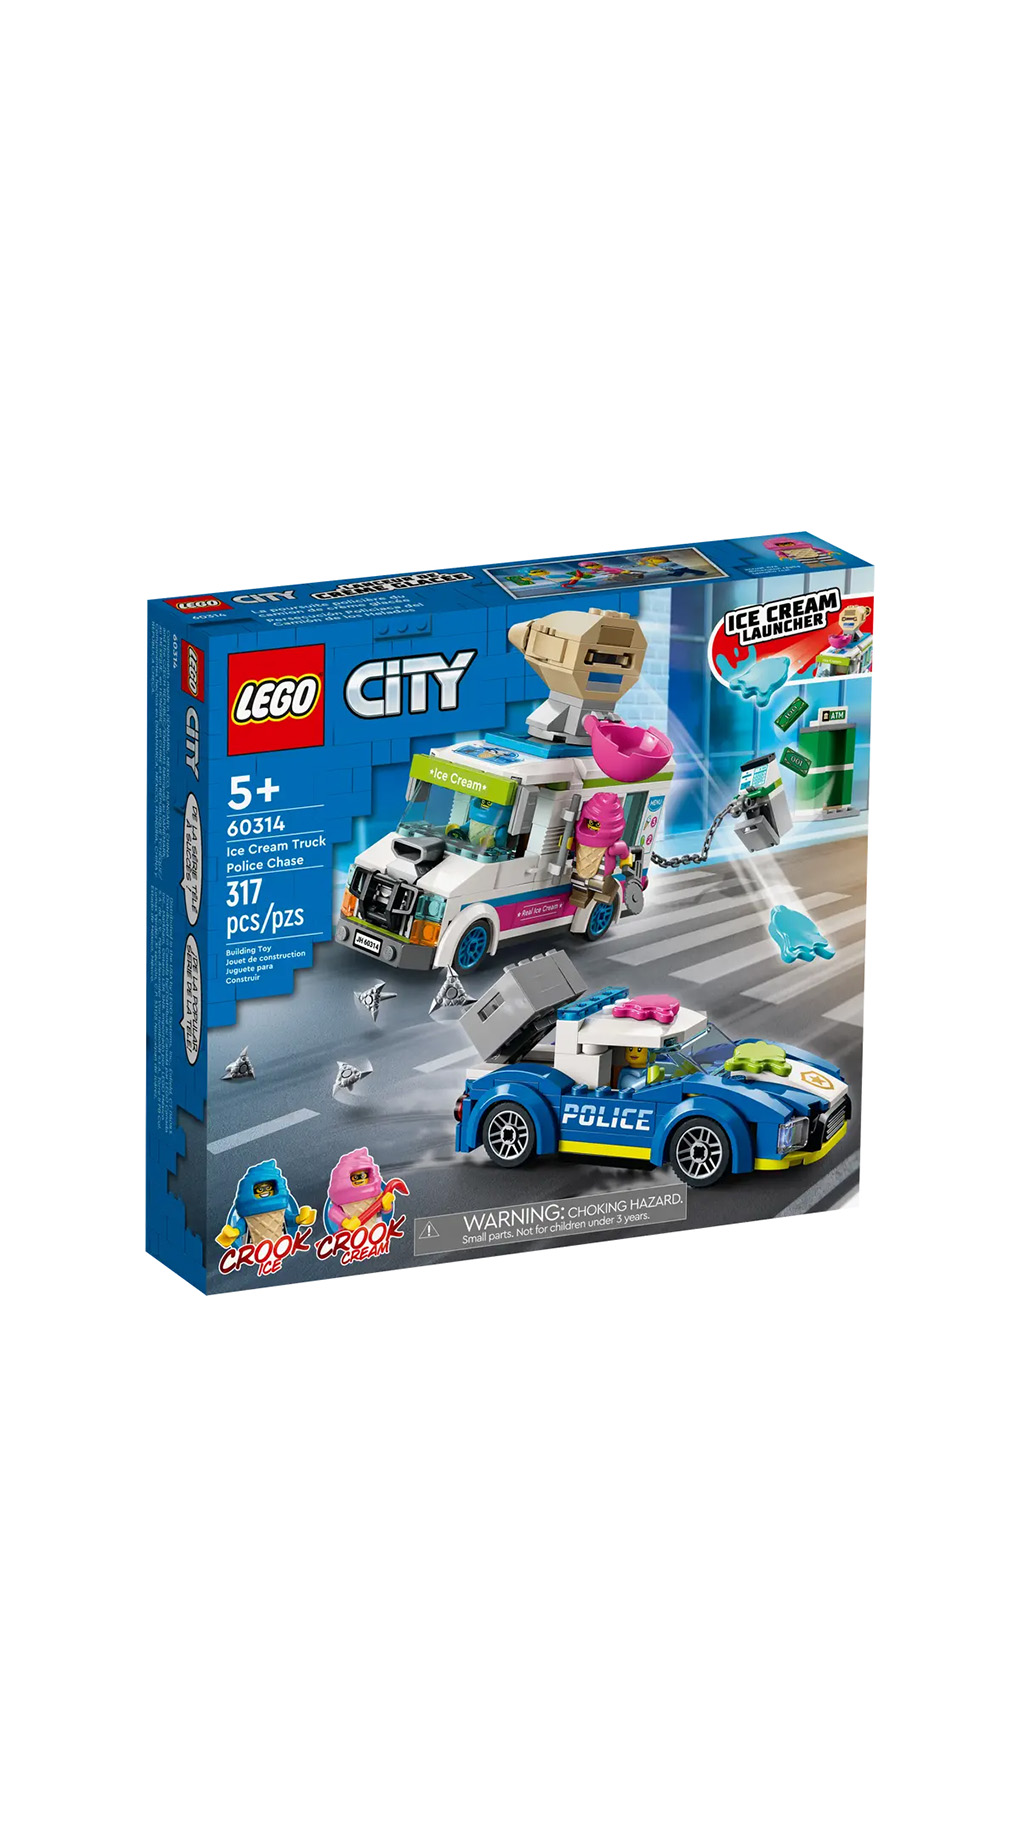 Lego city police αστυνομική καταδίωξη φορτηγού παγωτών 60314